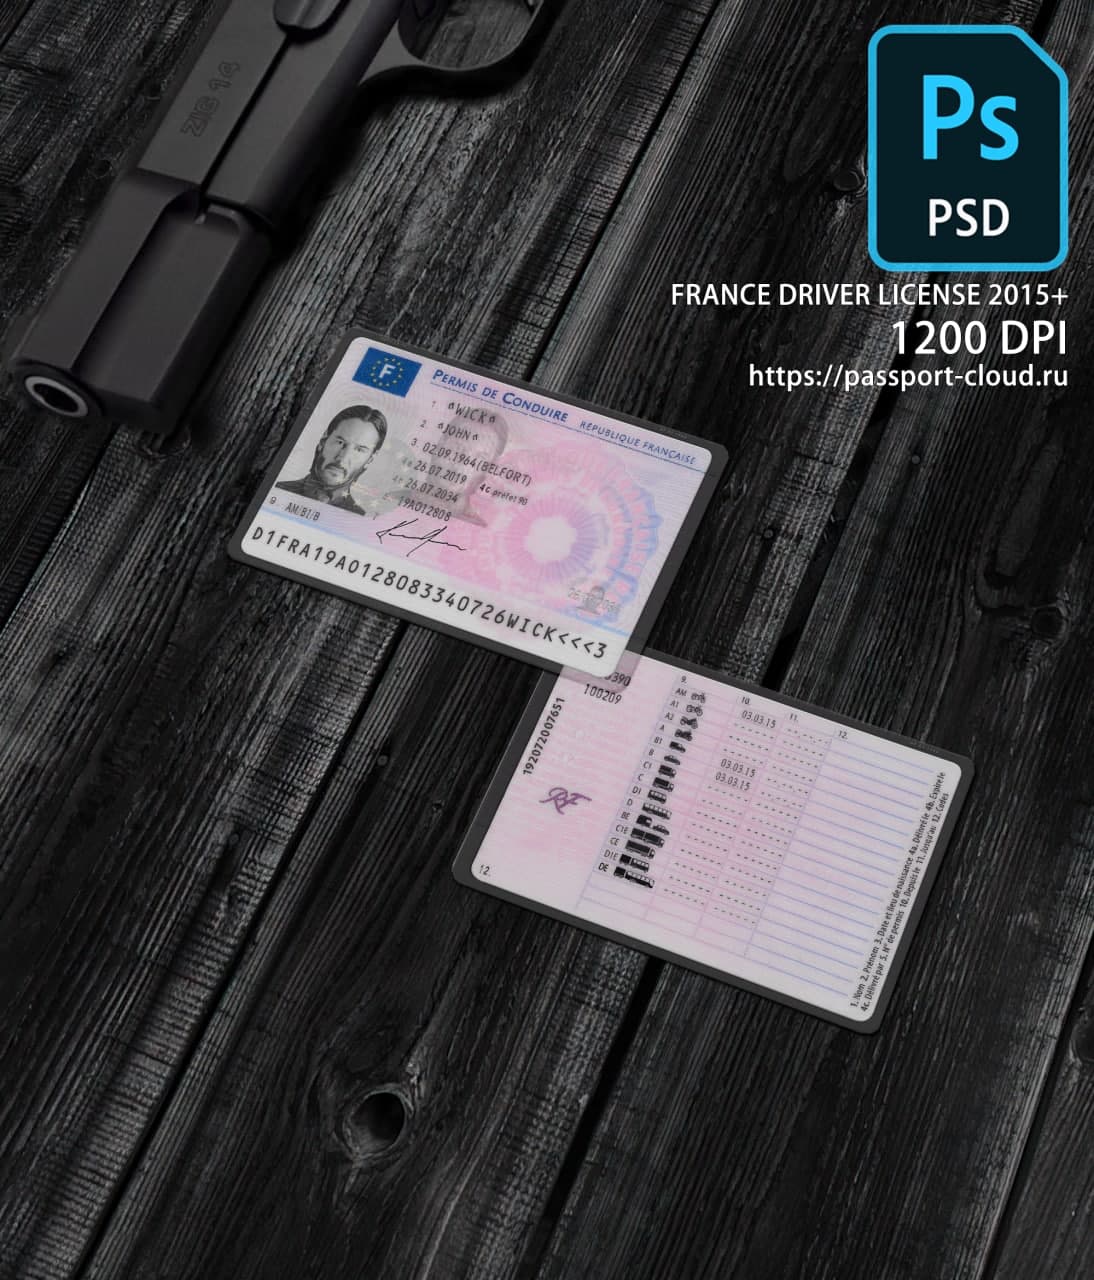 France Driver License 2015+ PSD1